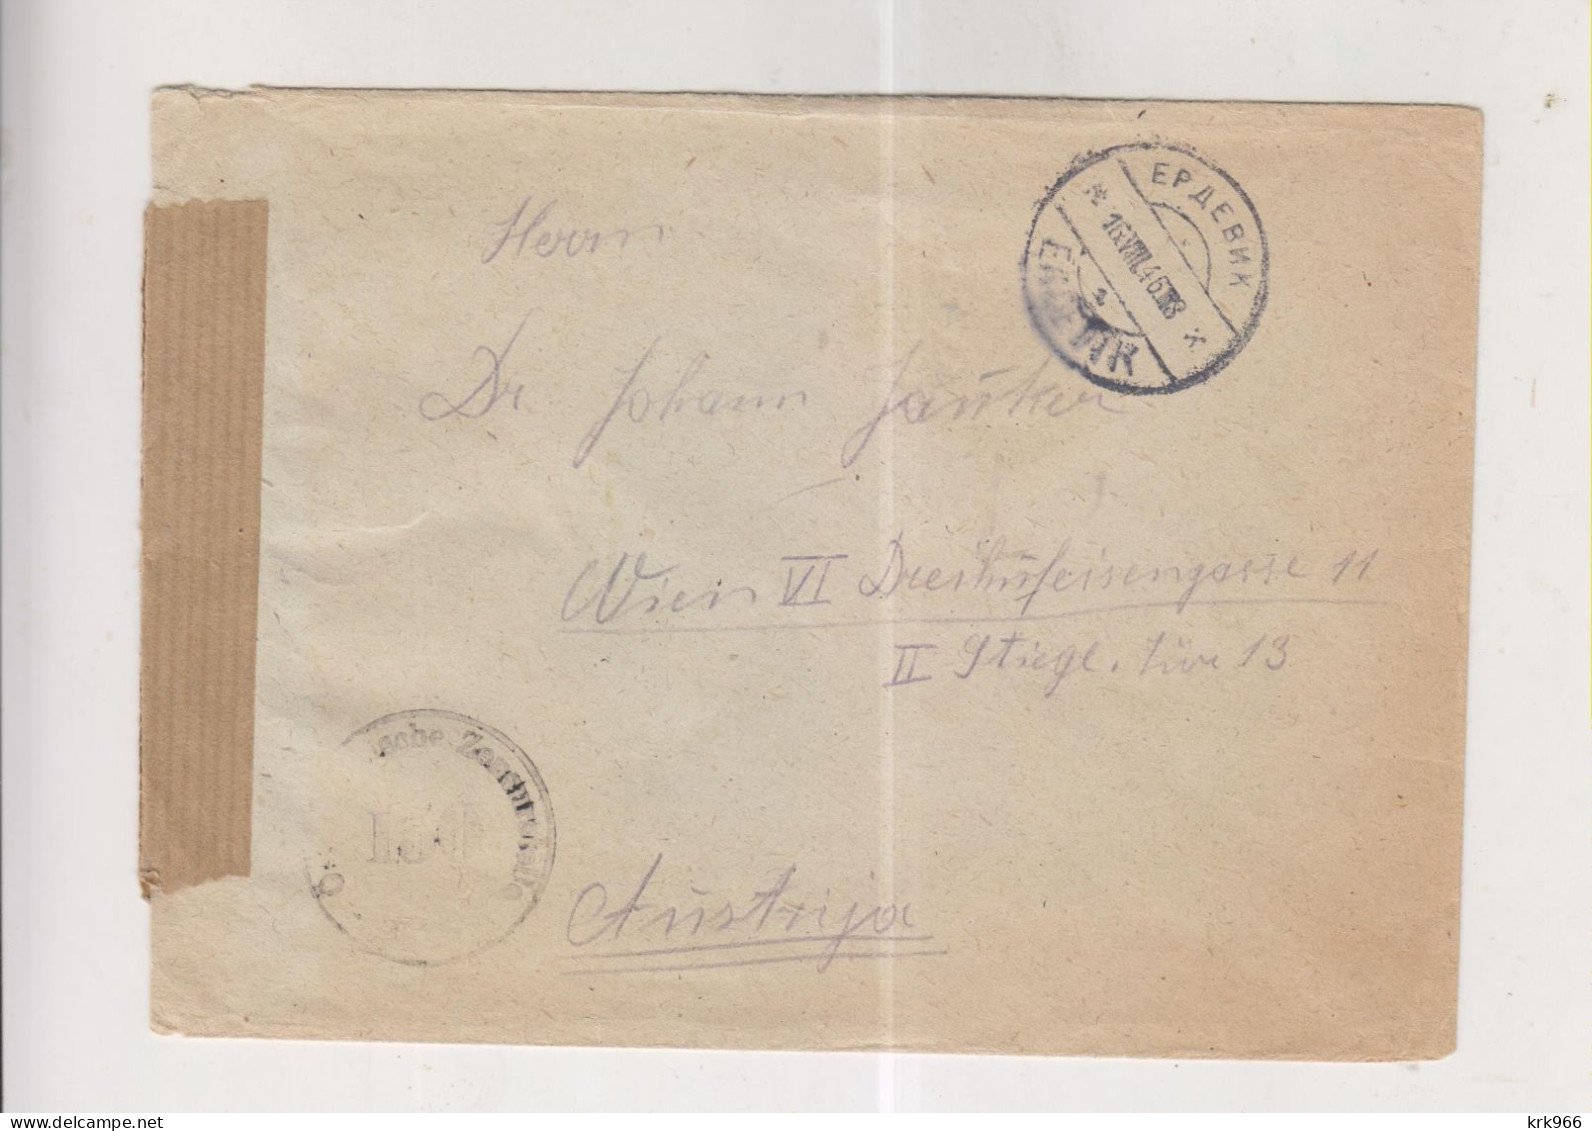 YUGOSLAVIA,1946 ERDEVIK  Censored  Cover To Austria - Lettres & Documents